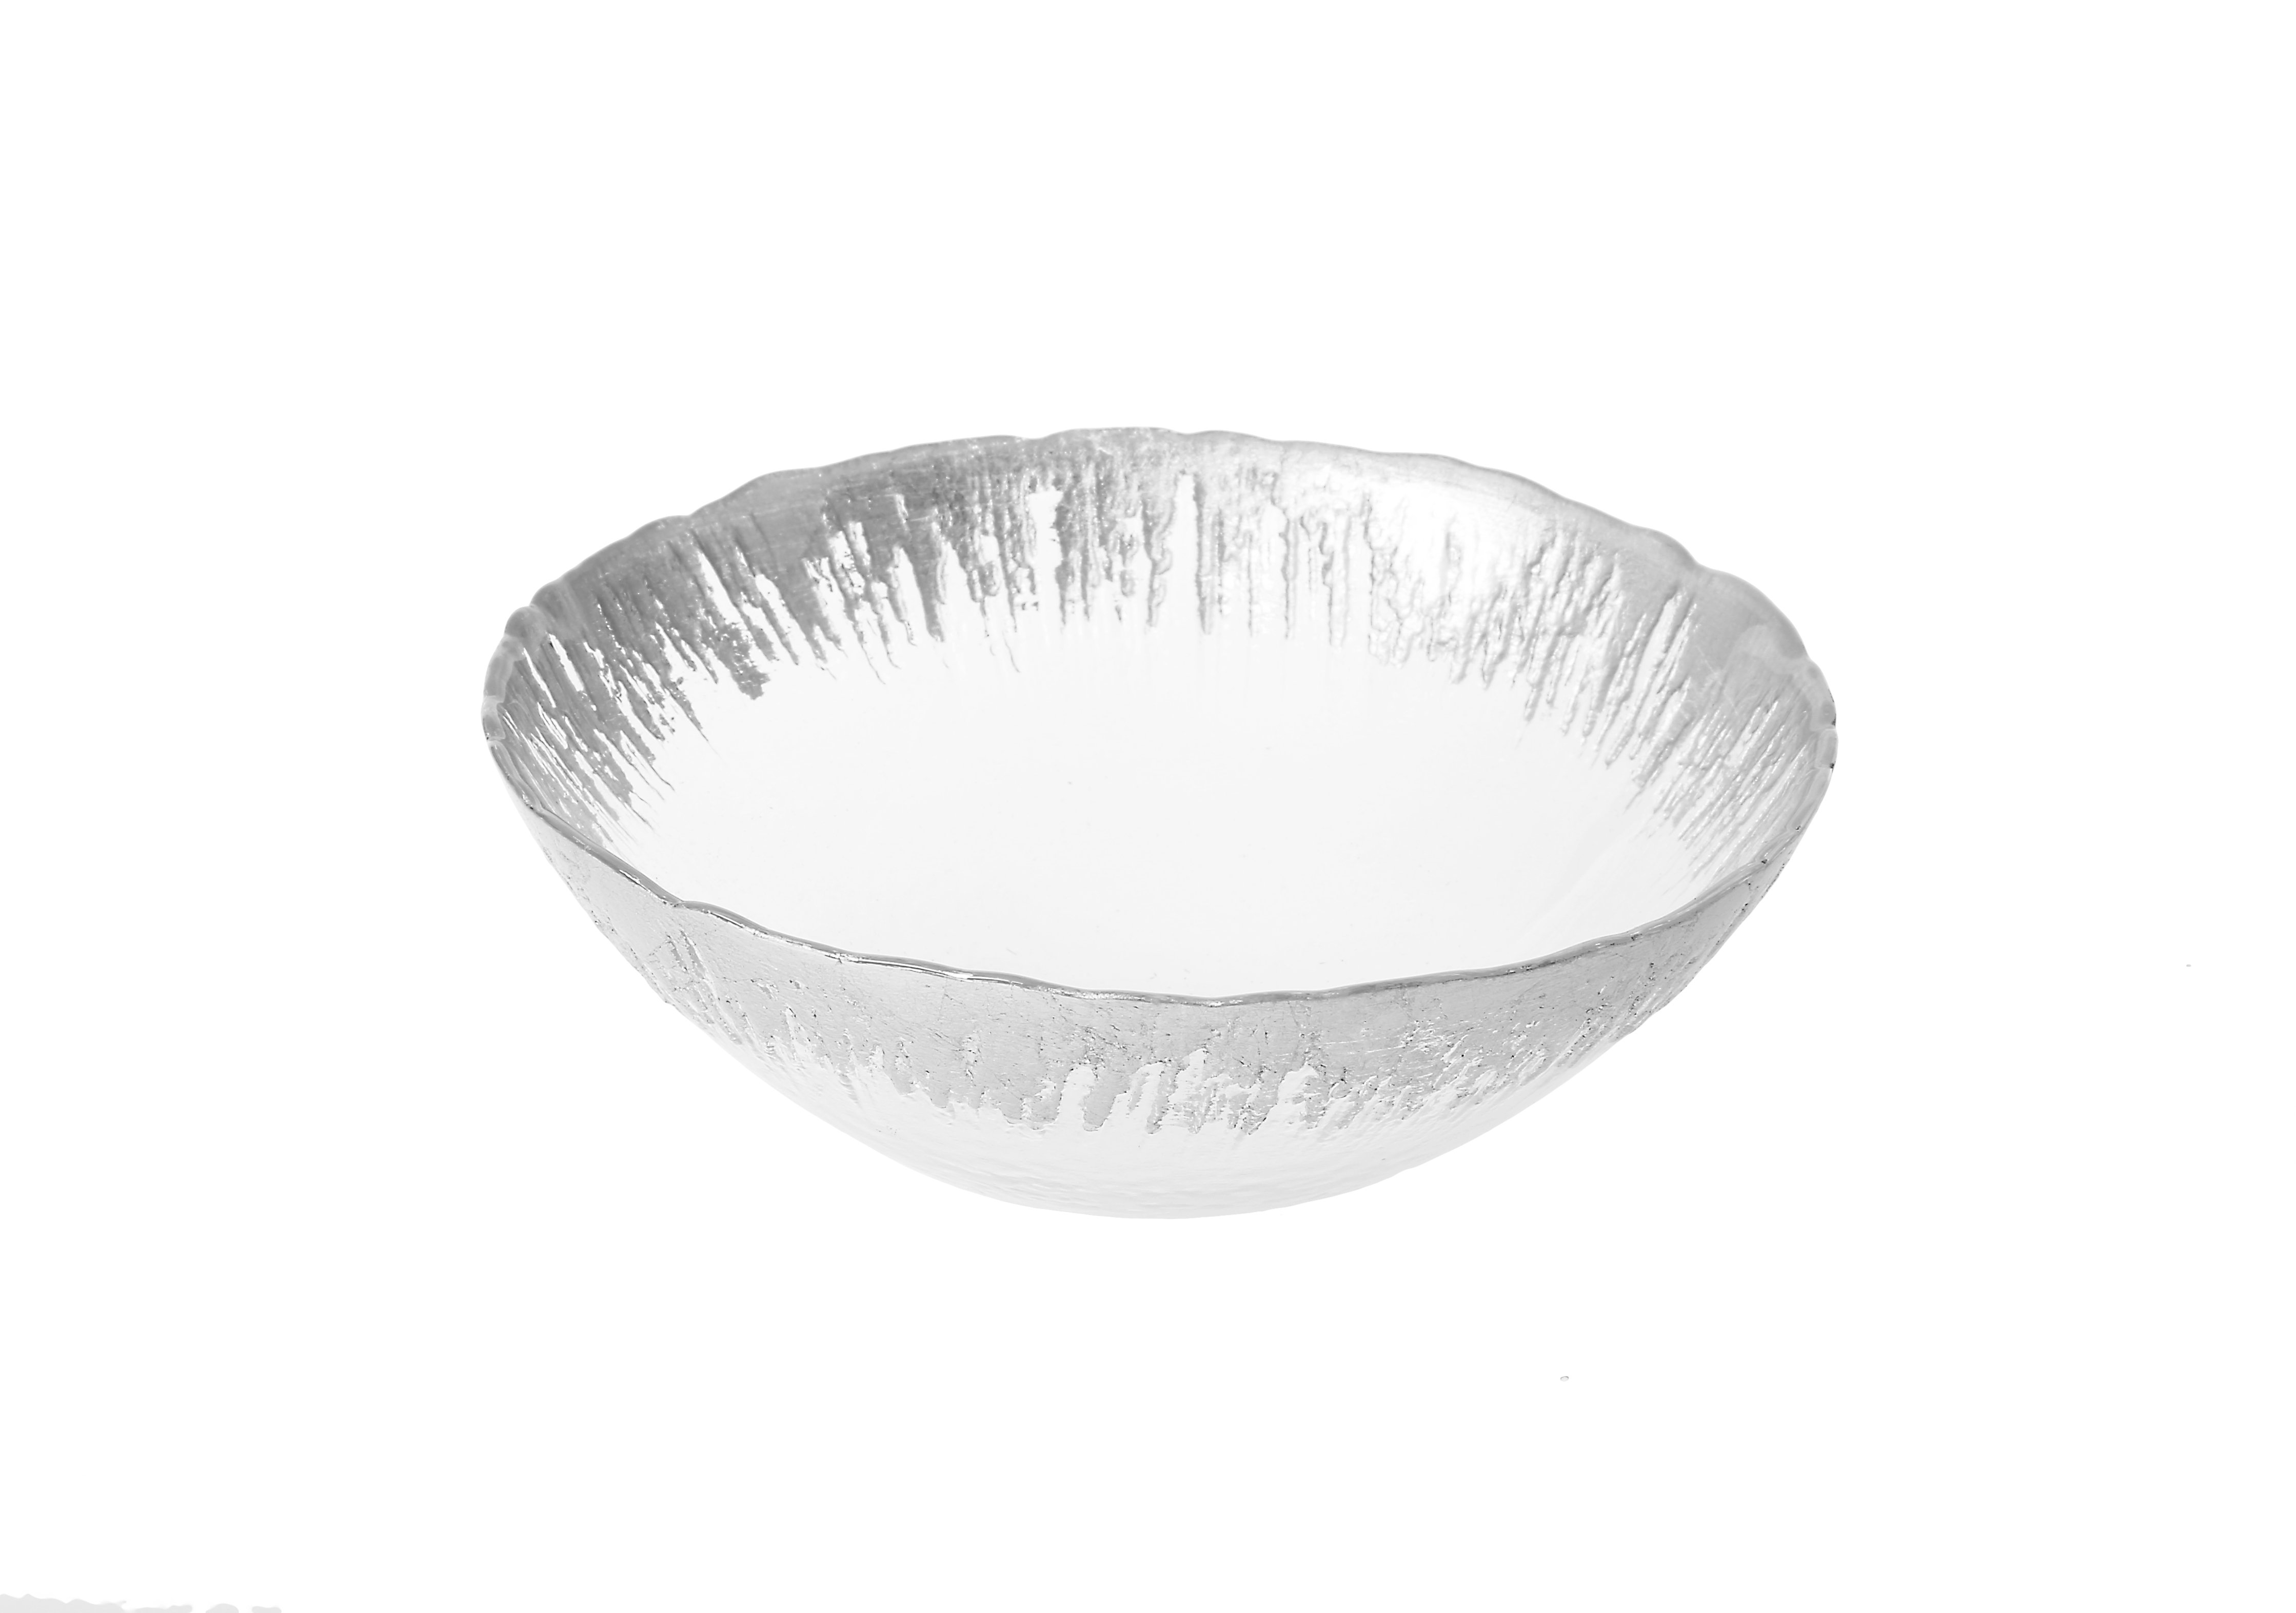 Everly Quinn Mora Ceramic Bowls For Kitchen, 28Oz - Bowl Set Of 4 - For  Cereal, Salad, Pasta, Soup, Dessert, Serving - Dishwasher, Microwave, And  Oven Safe - For Breakfast, Lunch And Dinner